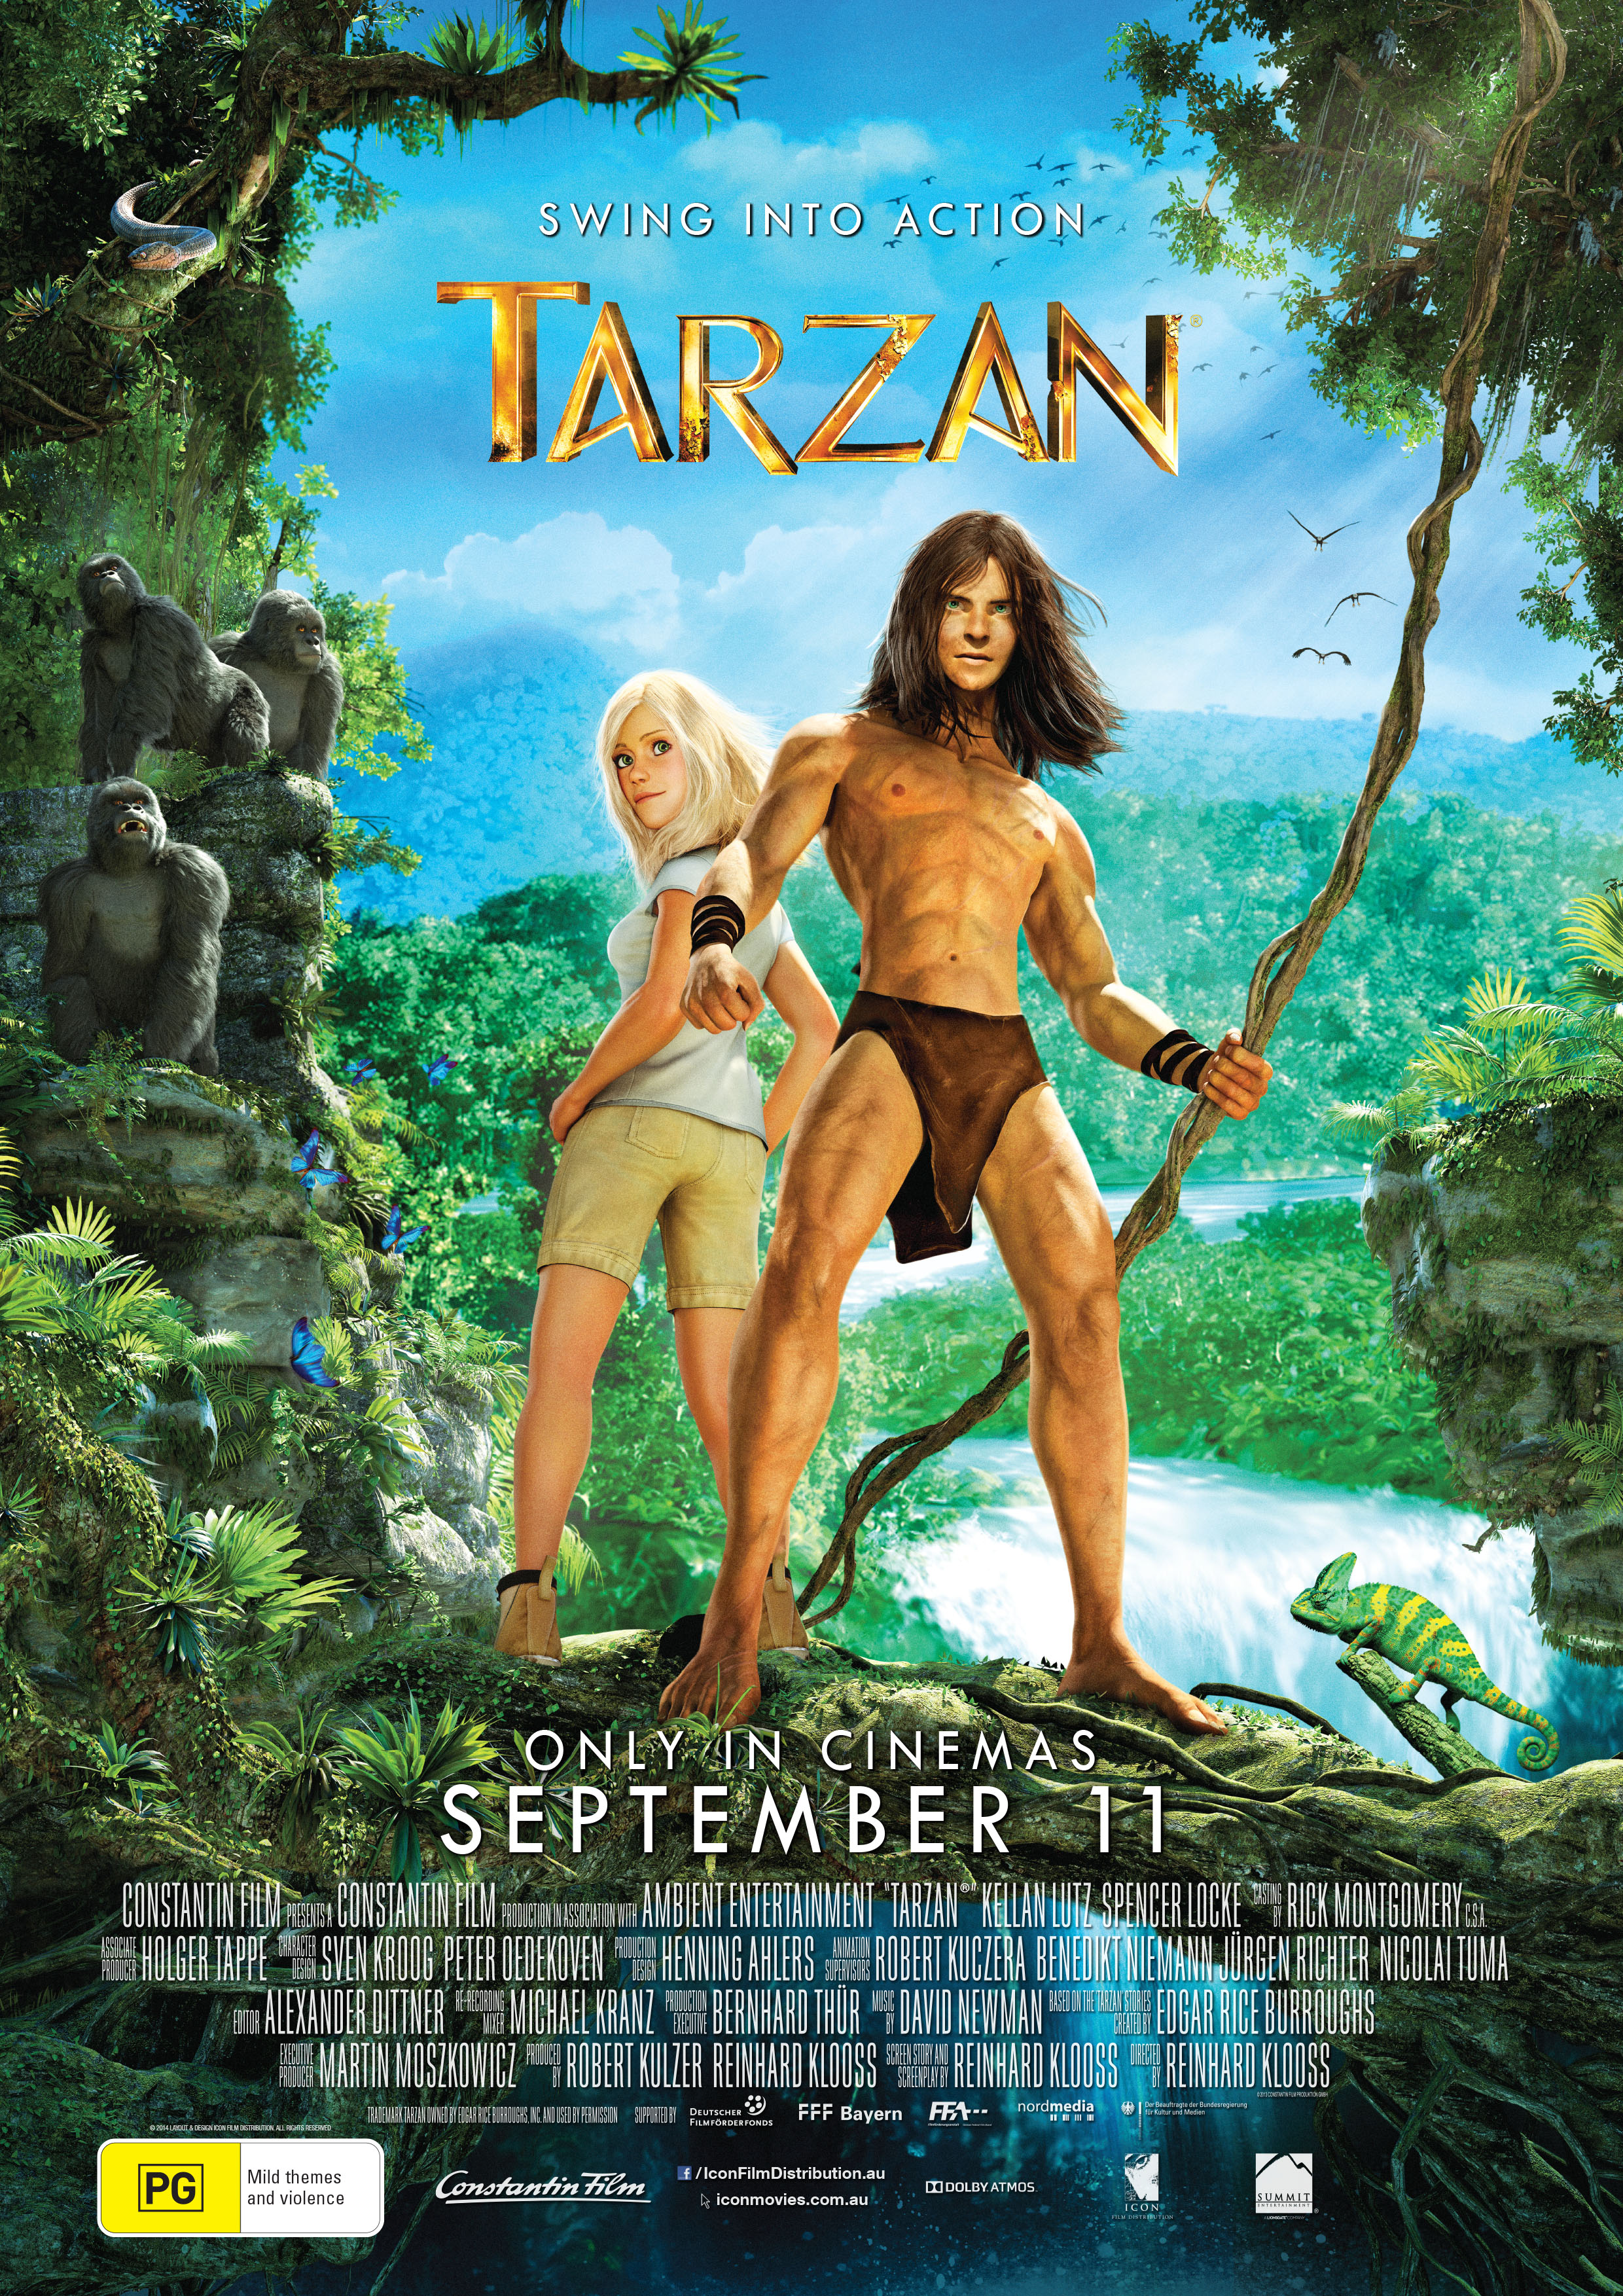 WIN Tickets to the new Tarzan Movie Melbourne Mamma